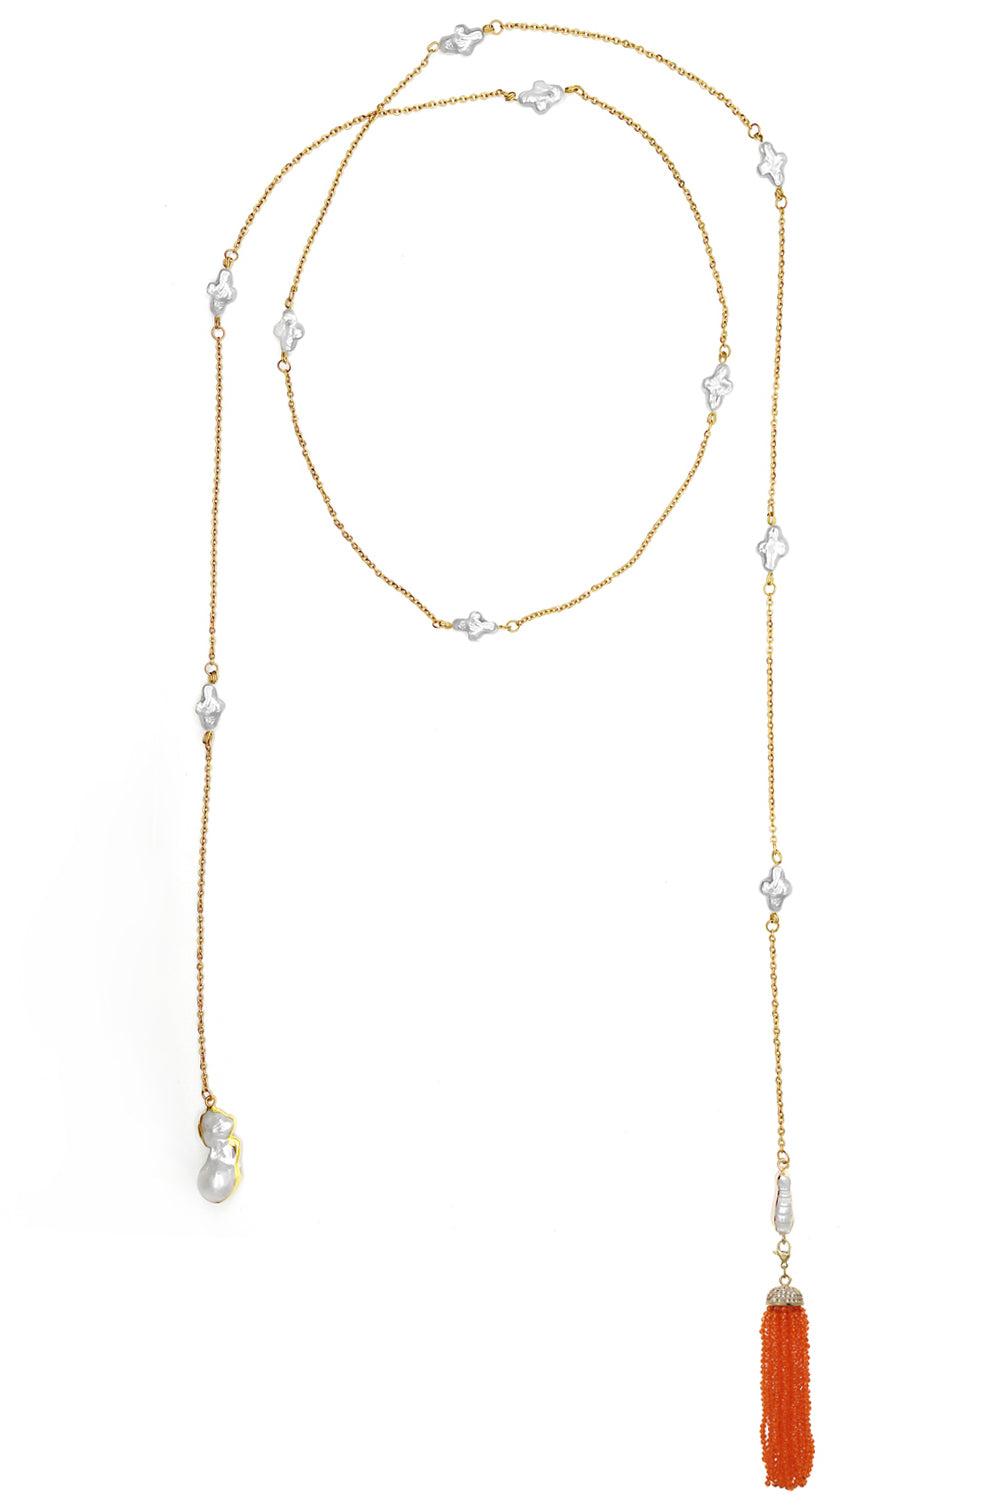 Amova Orange Tassel Chain with Natural Pearls